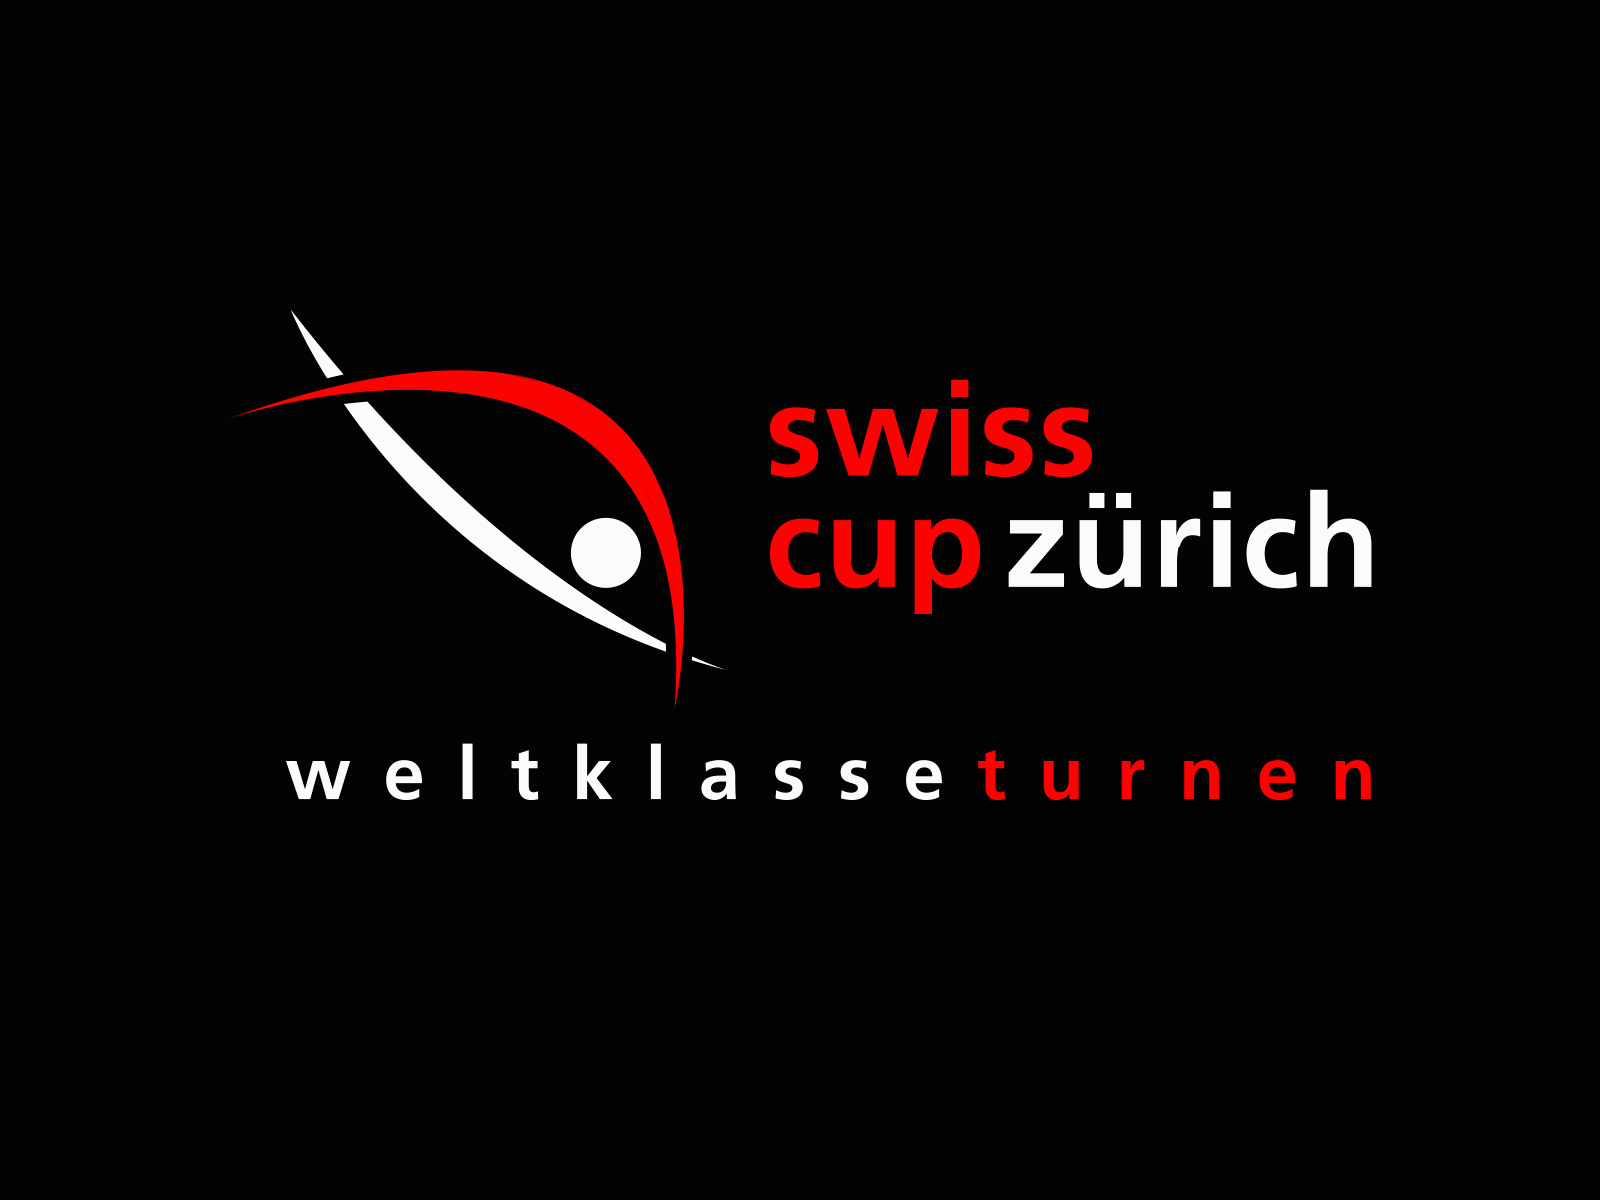 Swiss-cup Zürich Logo Animation animation logo motion graphics ui